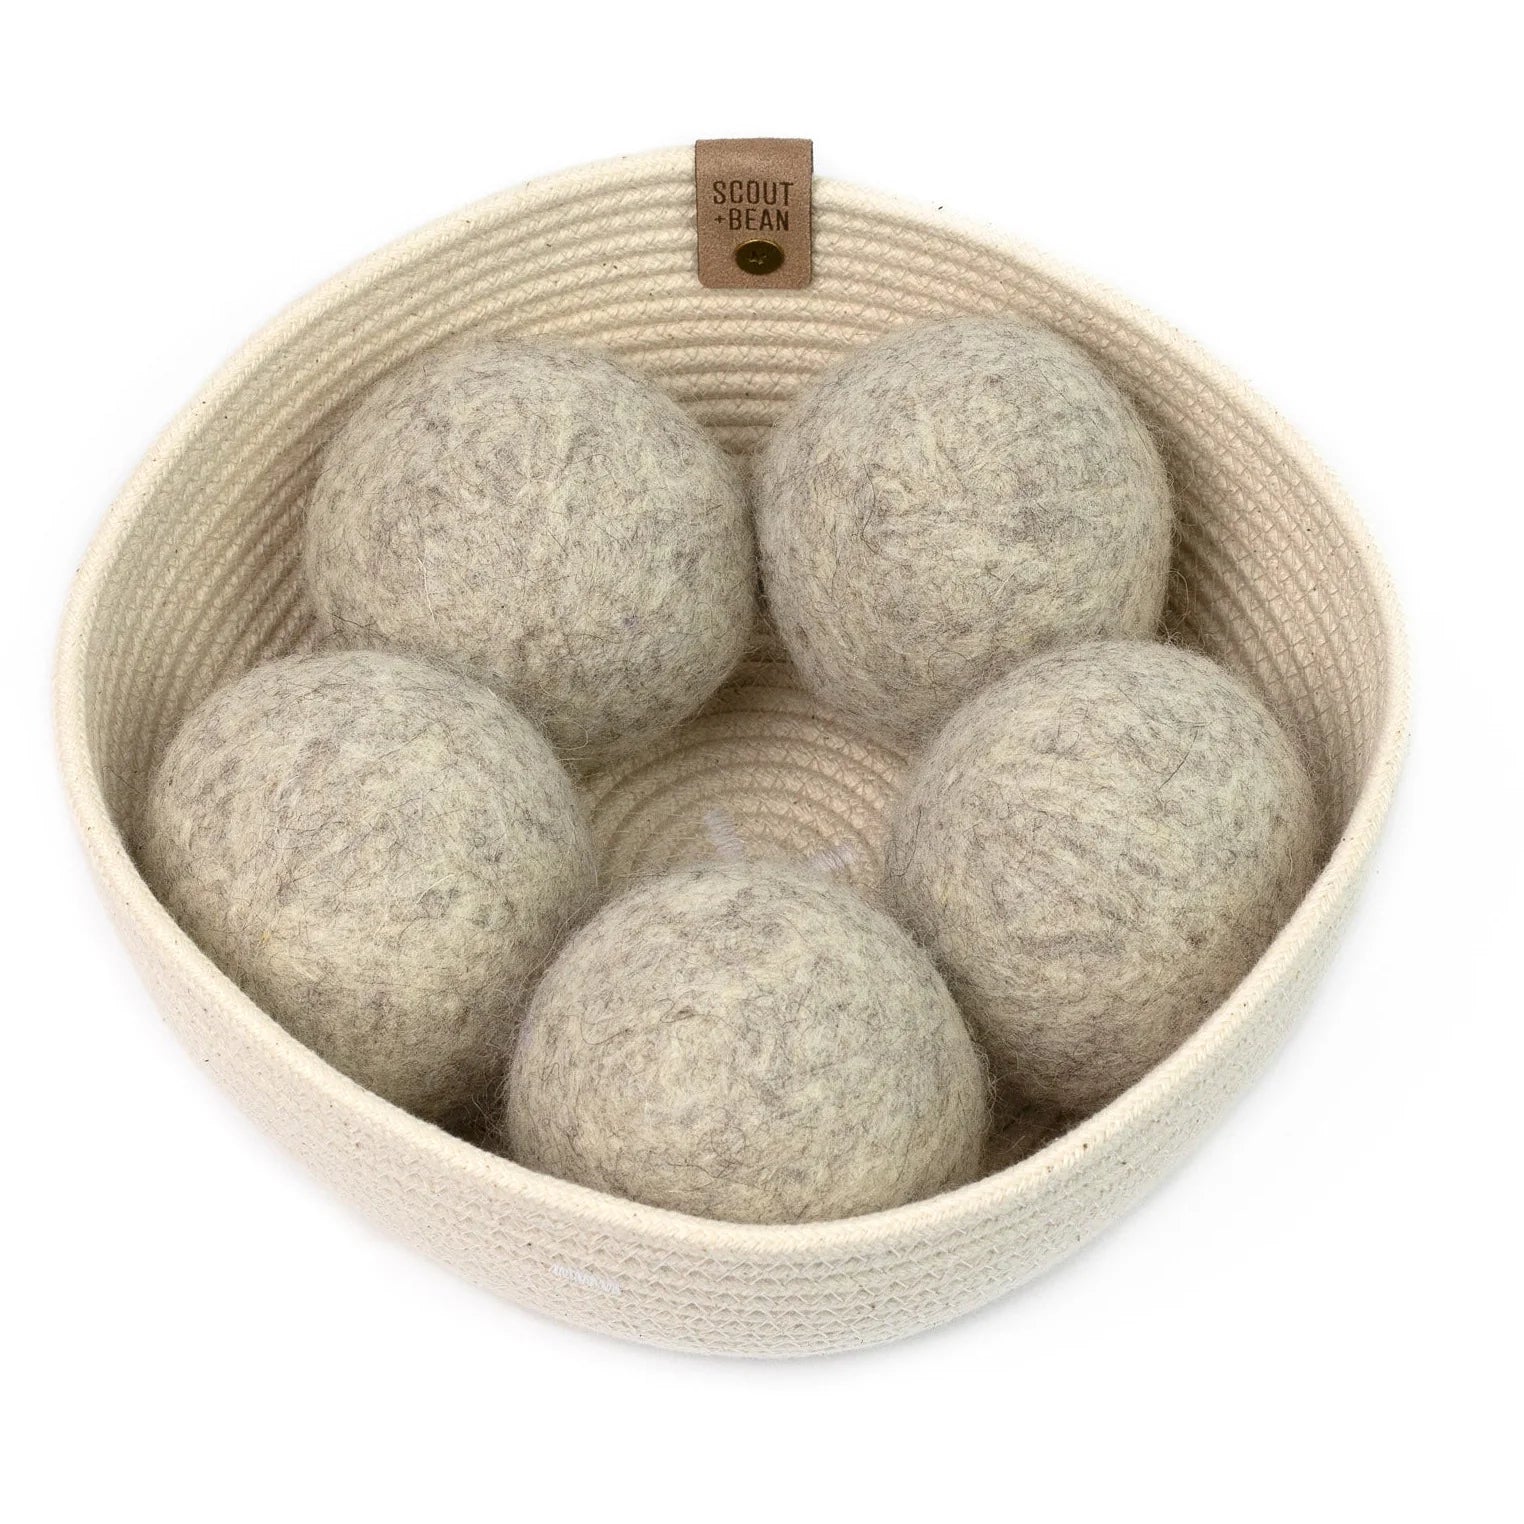 Wool Dryer Balls Gift Set | Jute Laundry Tote